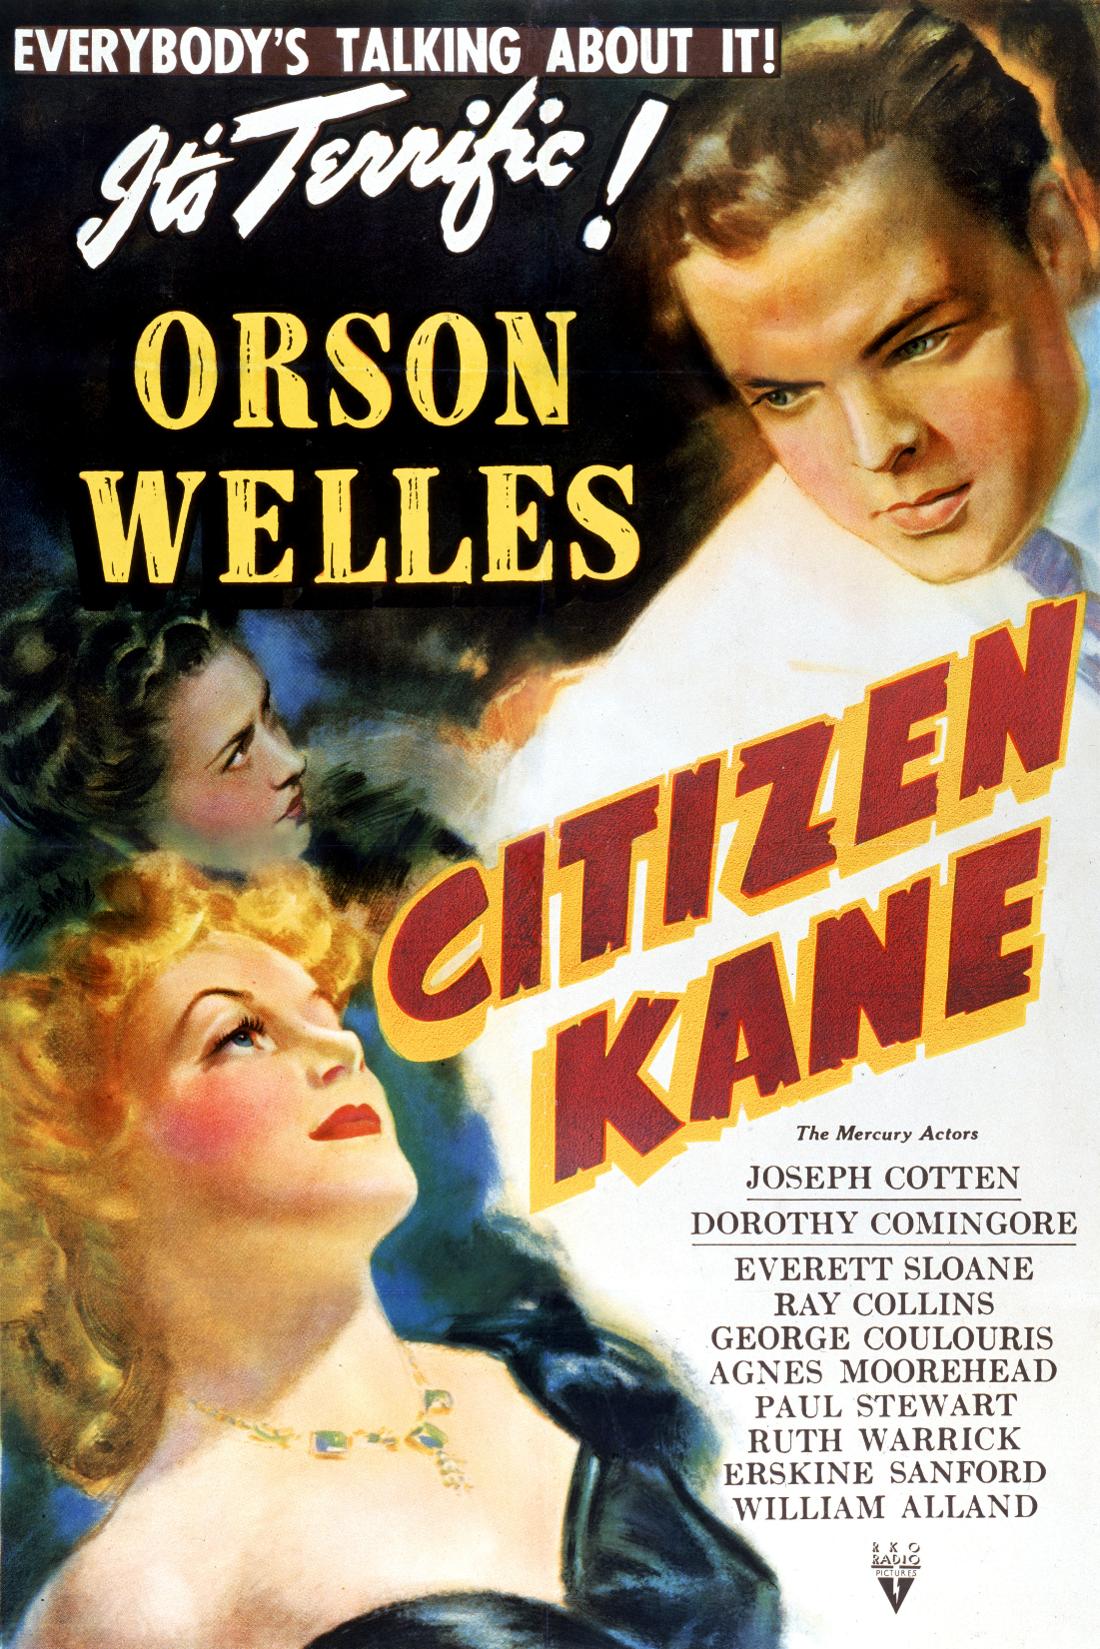 [RANKING FILMES] - Cidadão Kane (1941) / Jumanji (1995) VyNzkwMjQ5NzM_._V1_